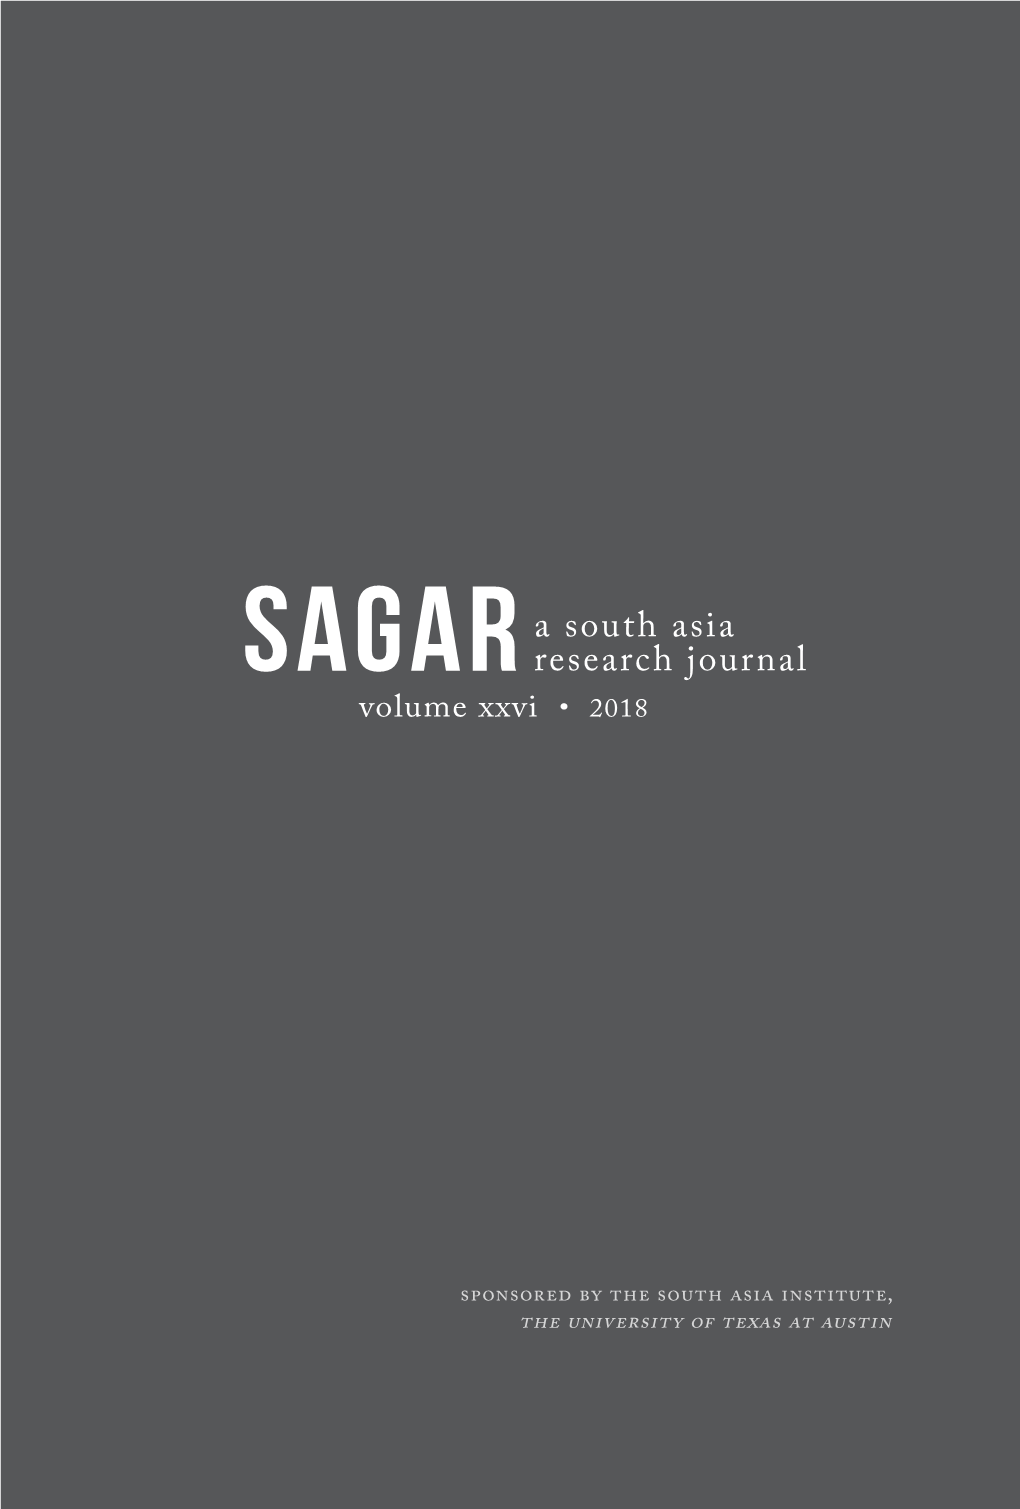 Sagara South Asia Research Journal